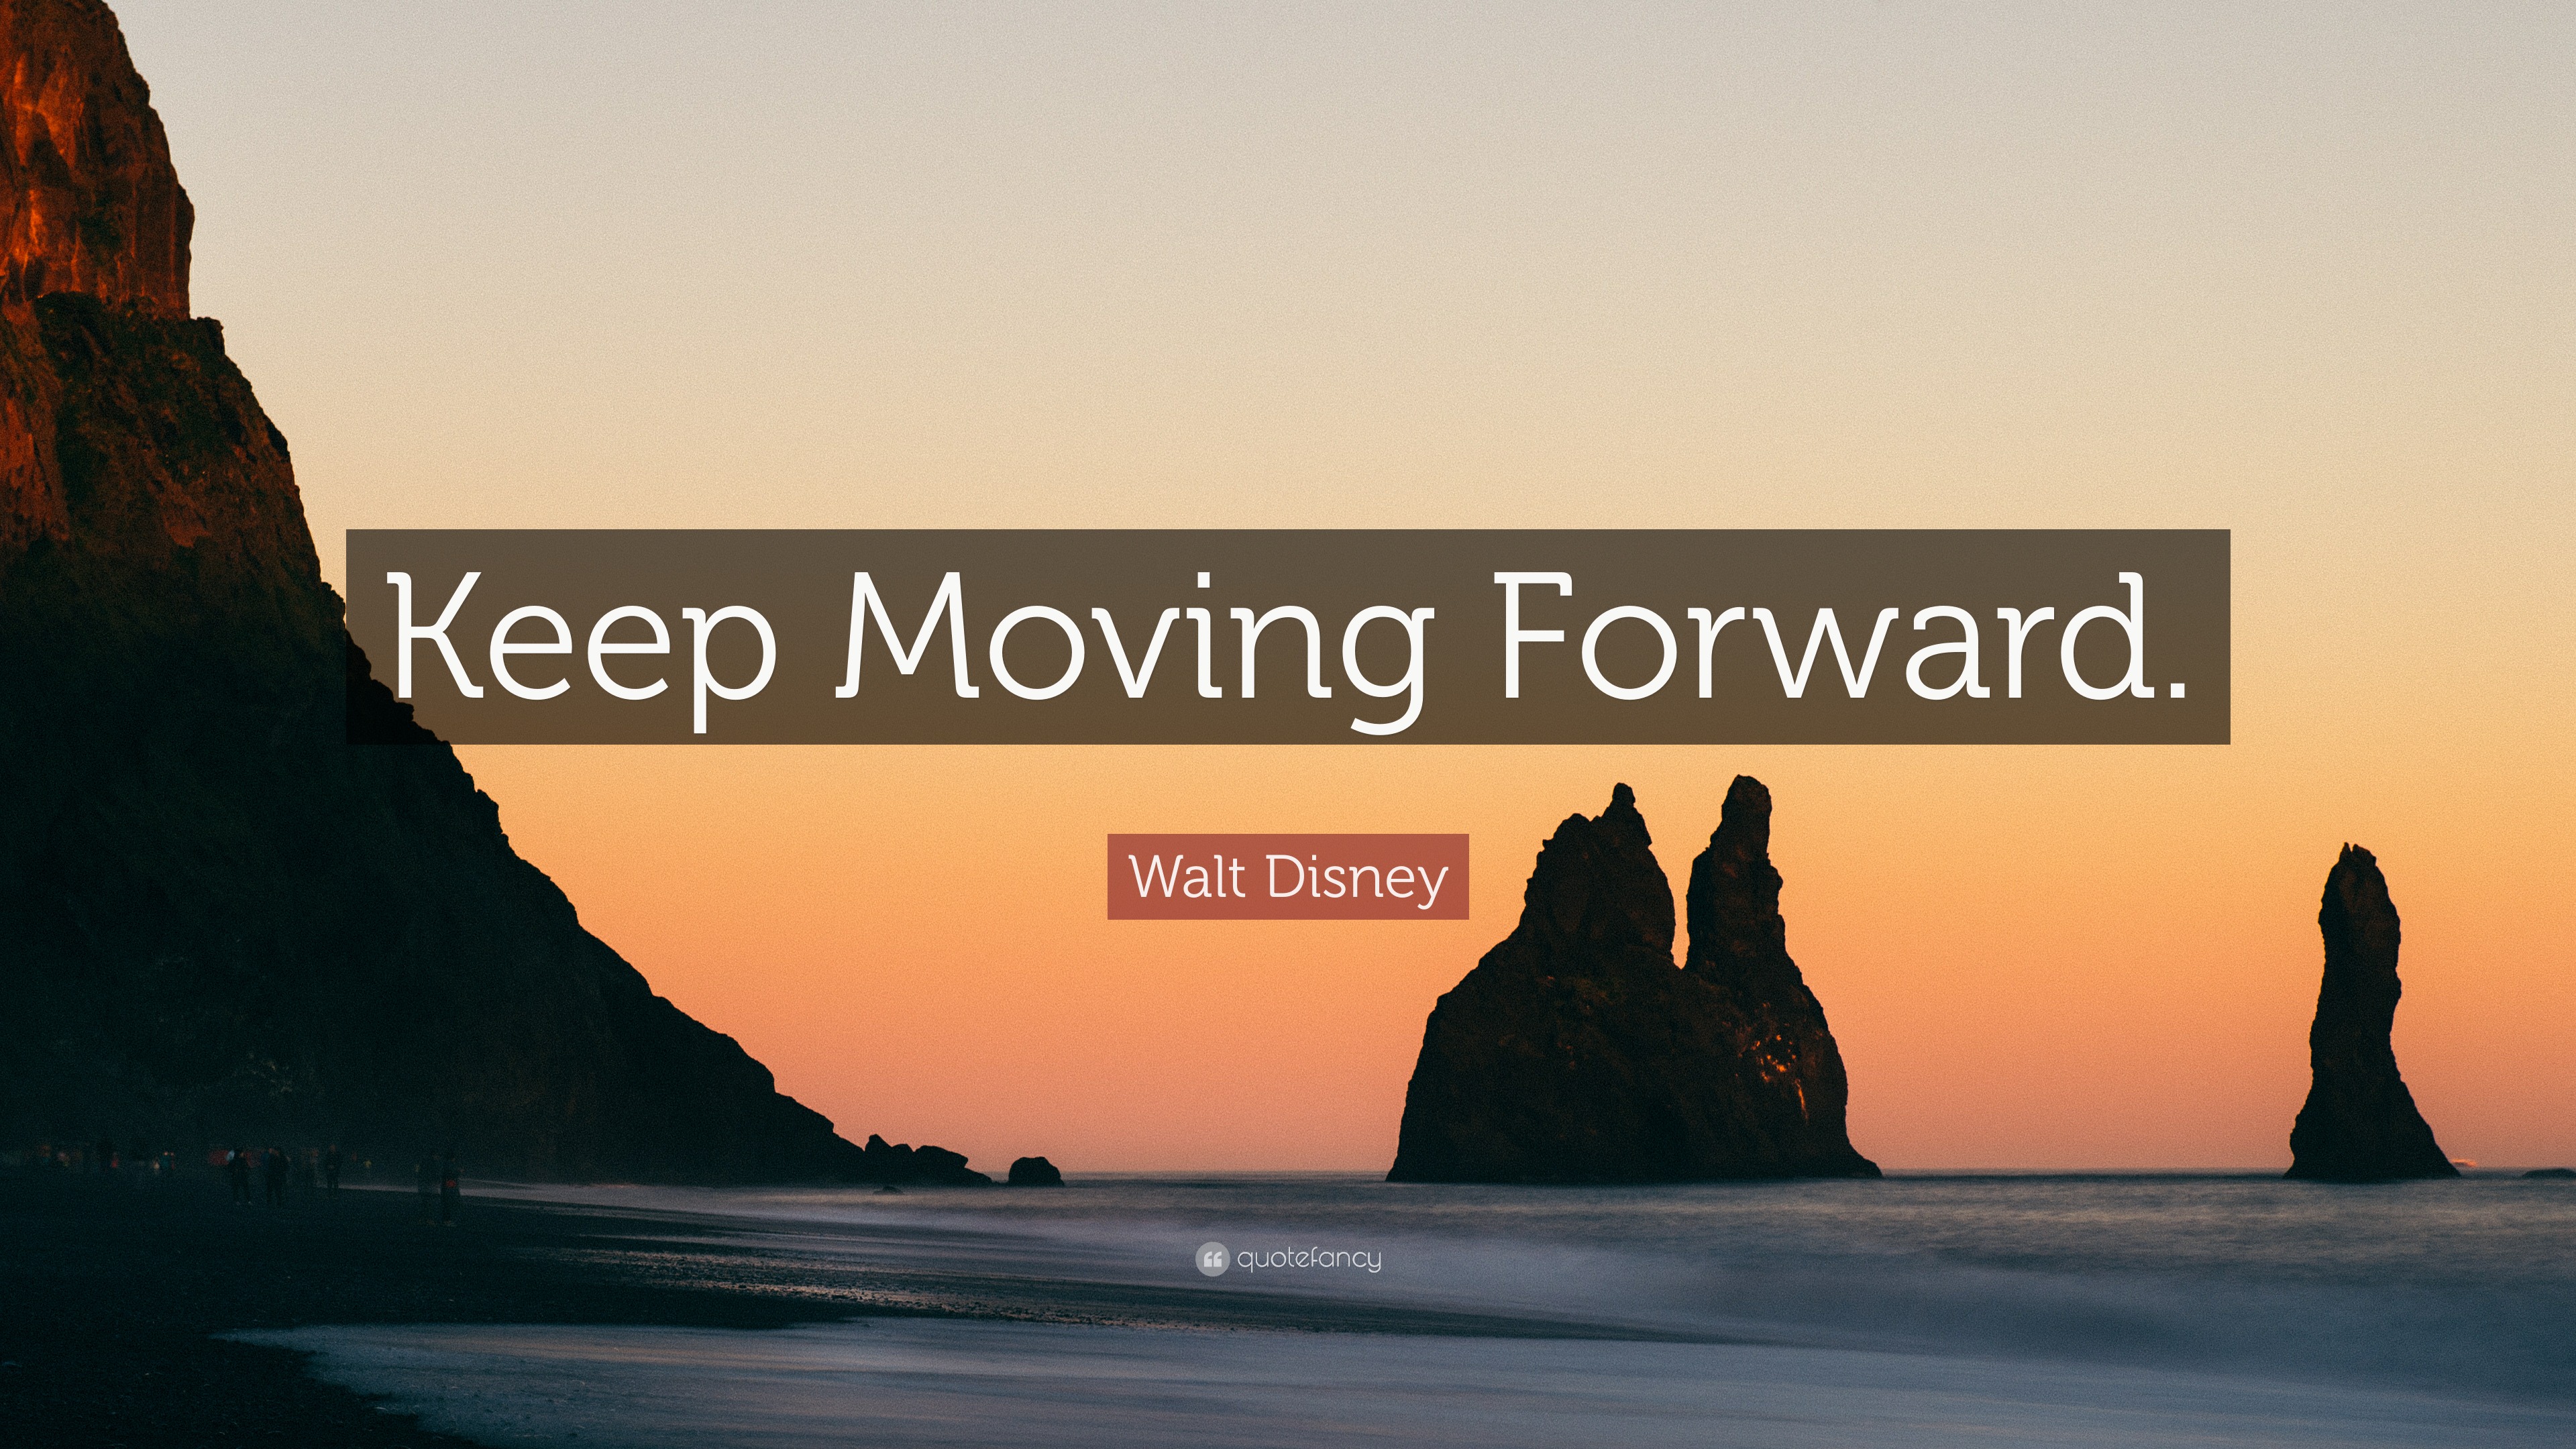 Walt Disney Quote: "Keep Moving Forward. 